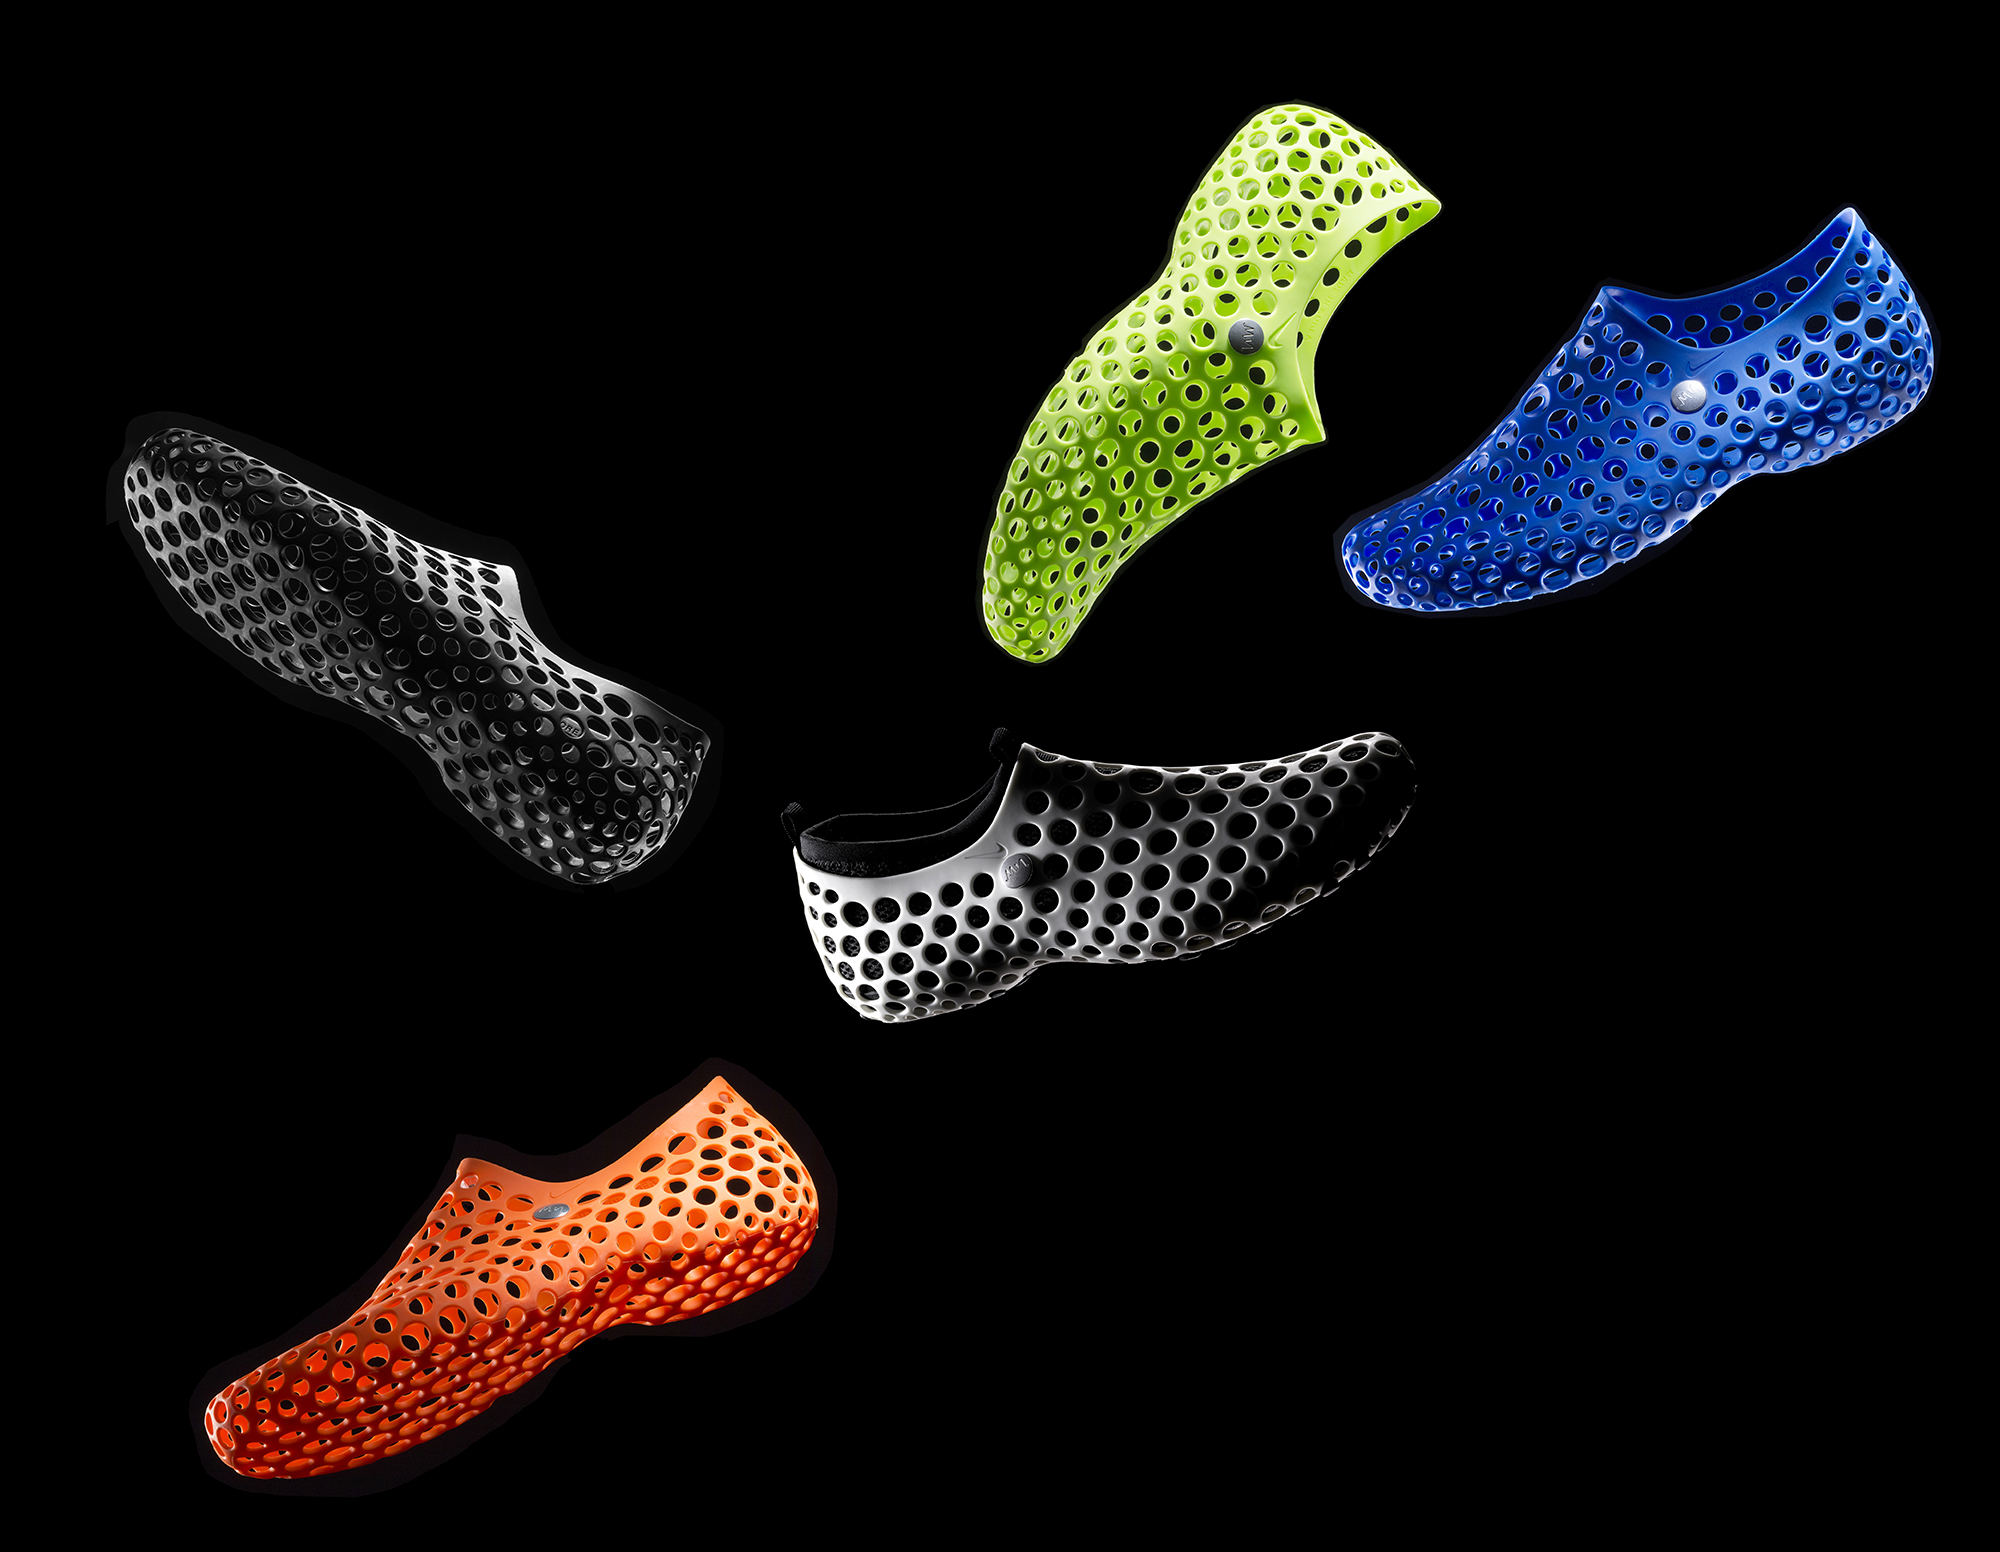 Nike Zvezdochka by Marc Newson - Gagosian Shop Re-Launch Event